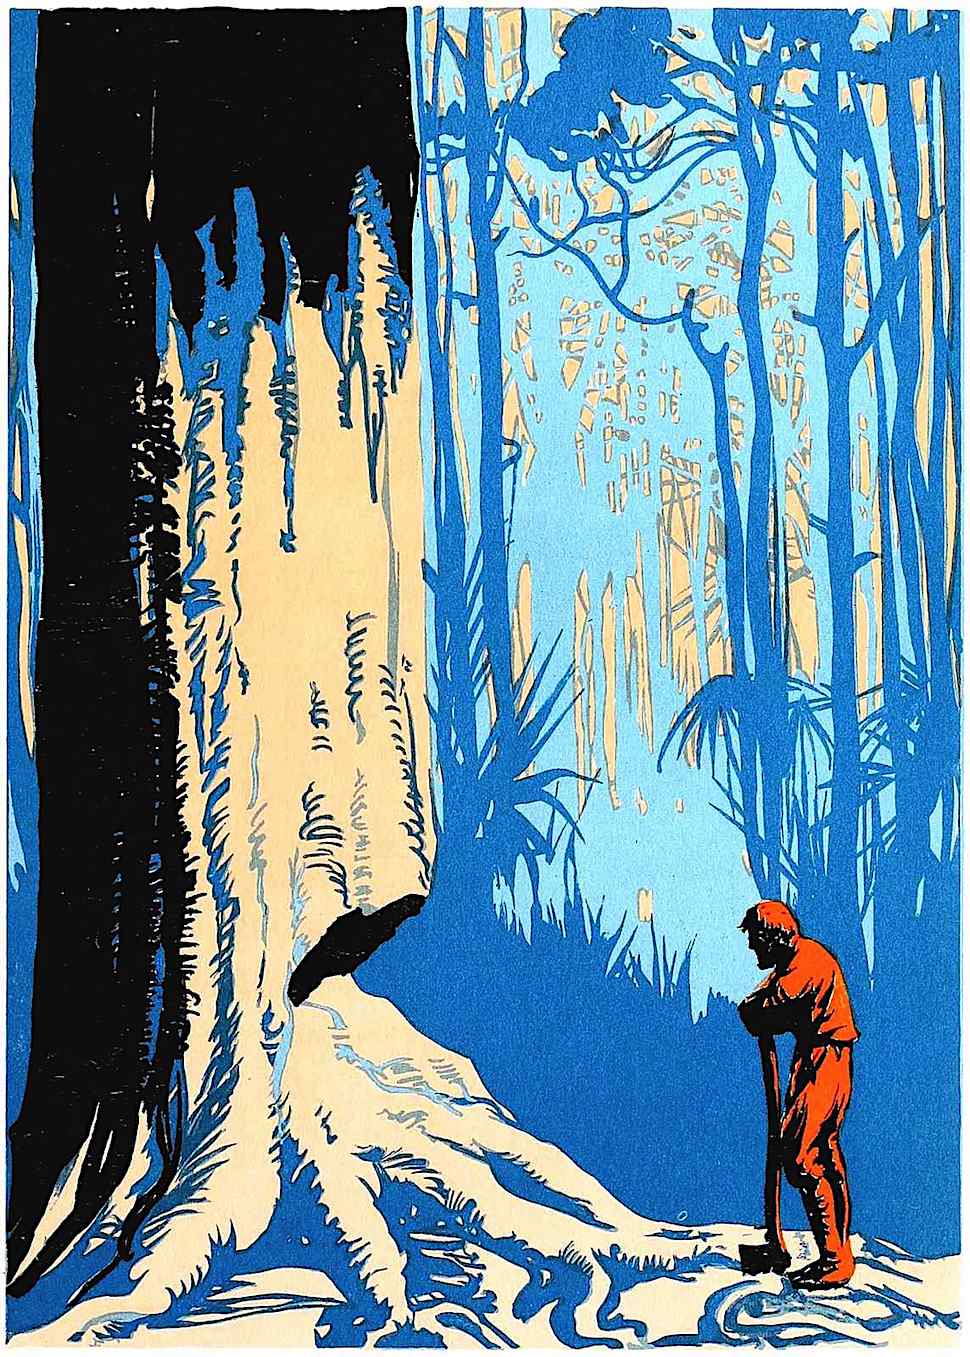 an E.A. Verpilleux book illustration 1931 for Robinson Crusoe, axe cutting a giant tree